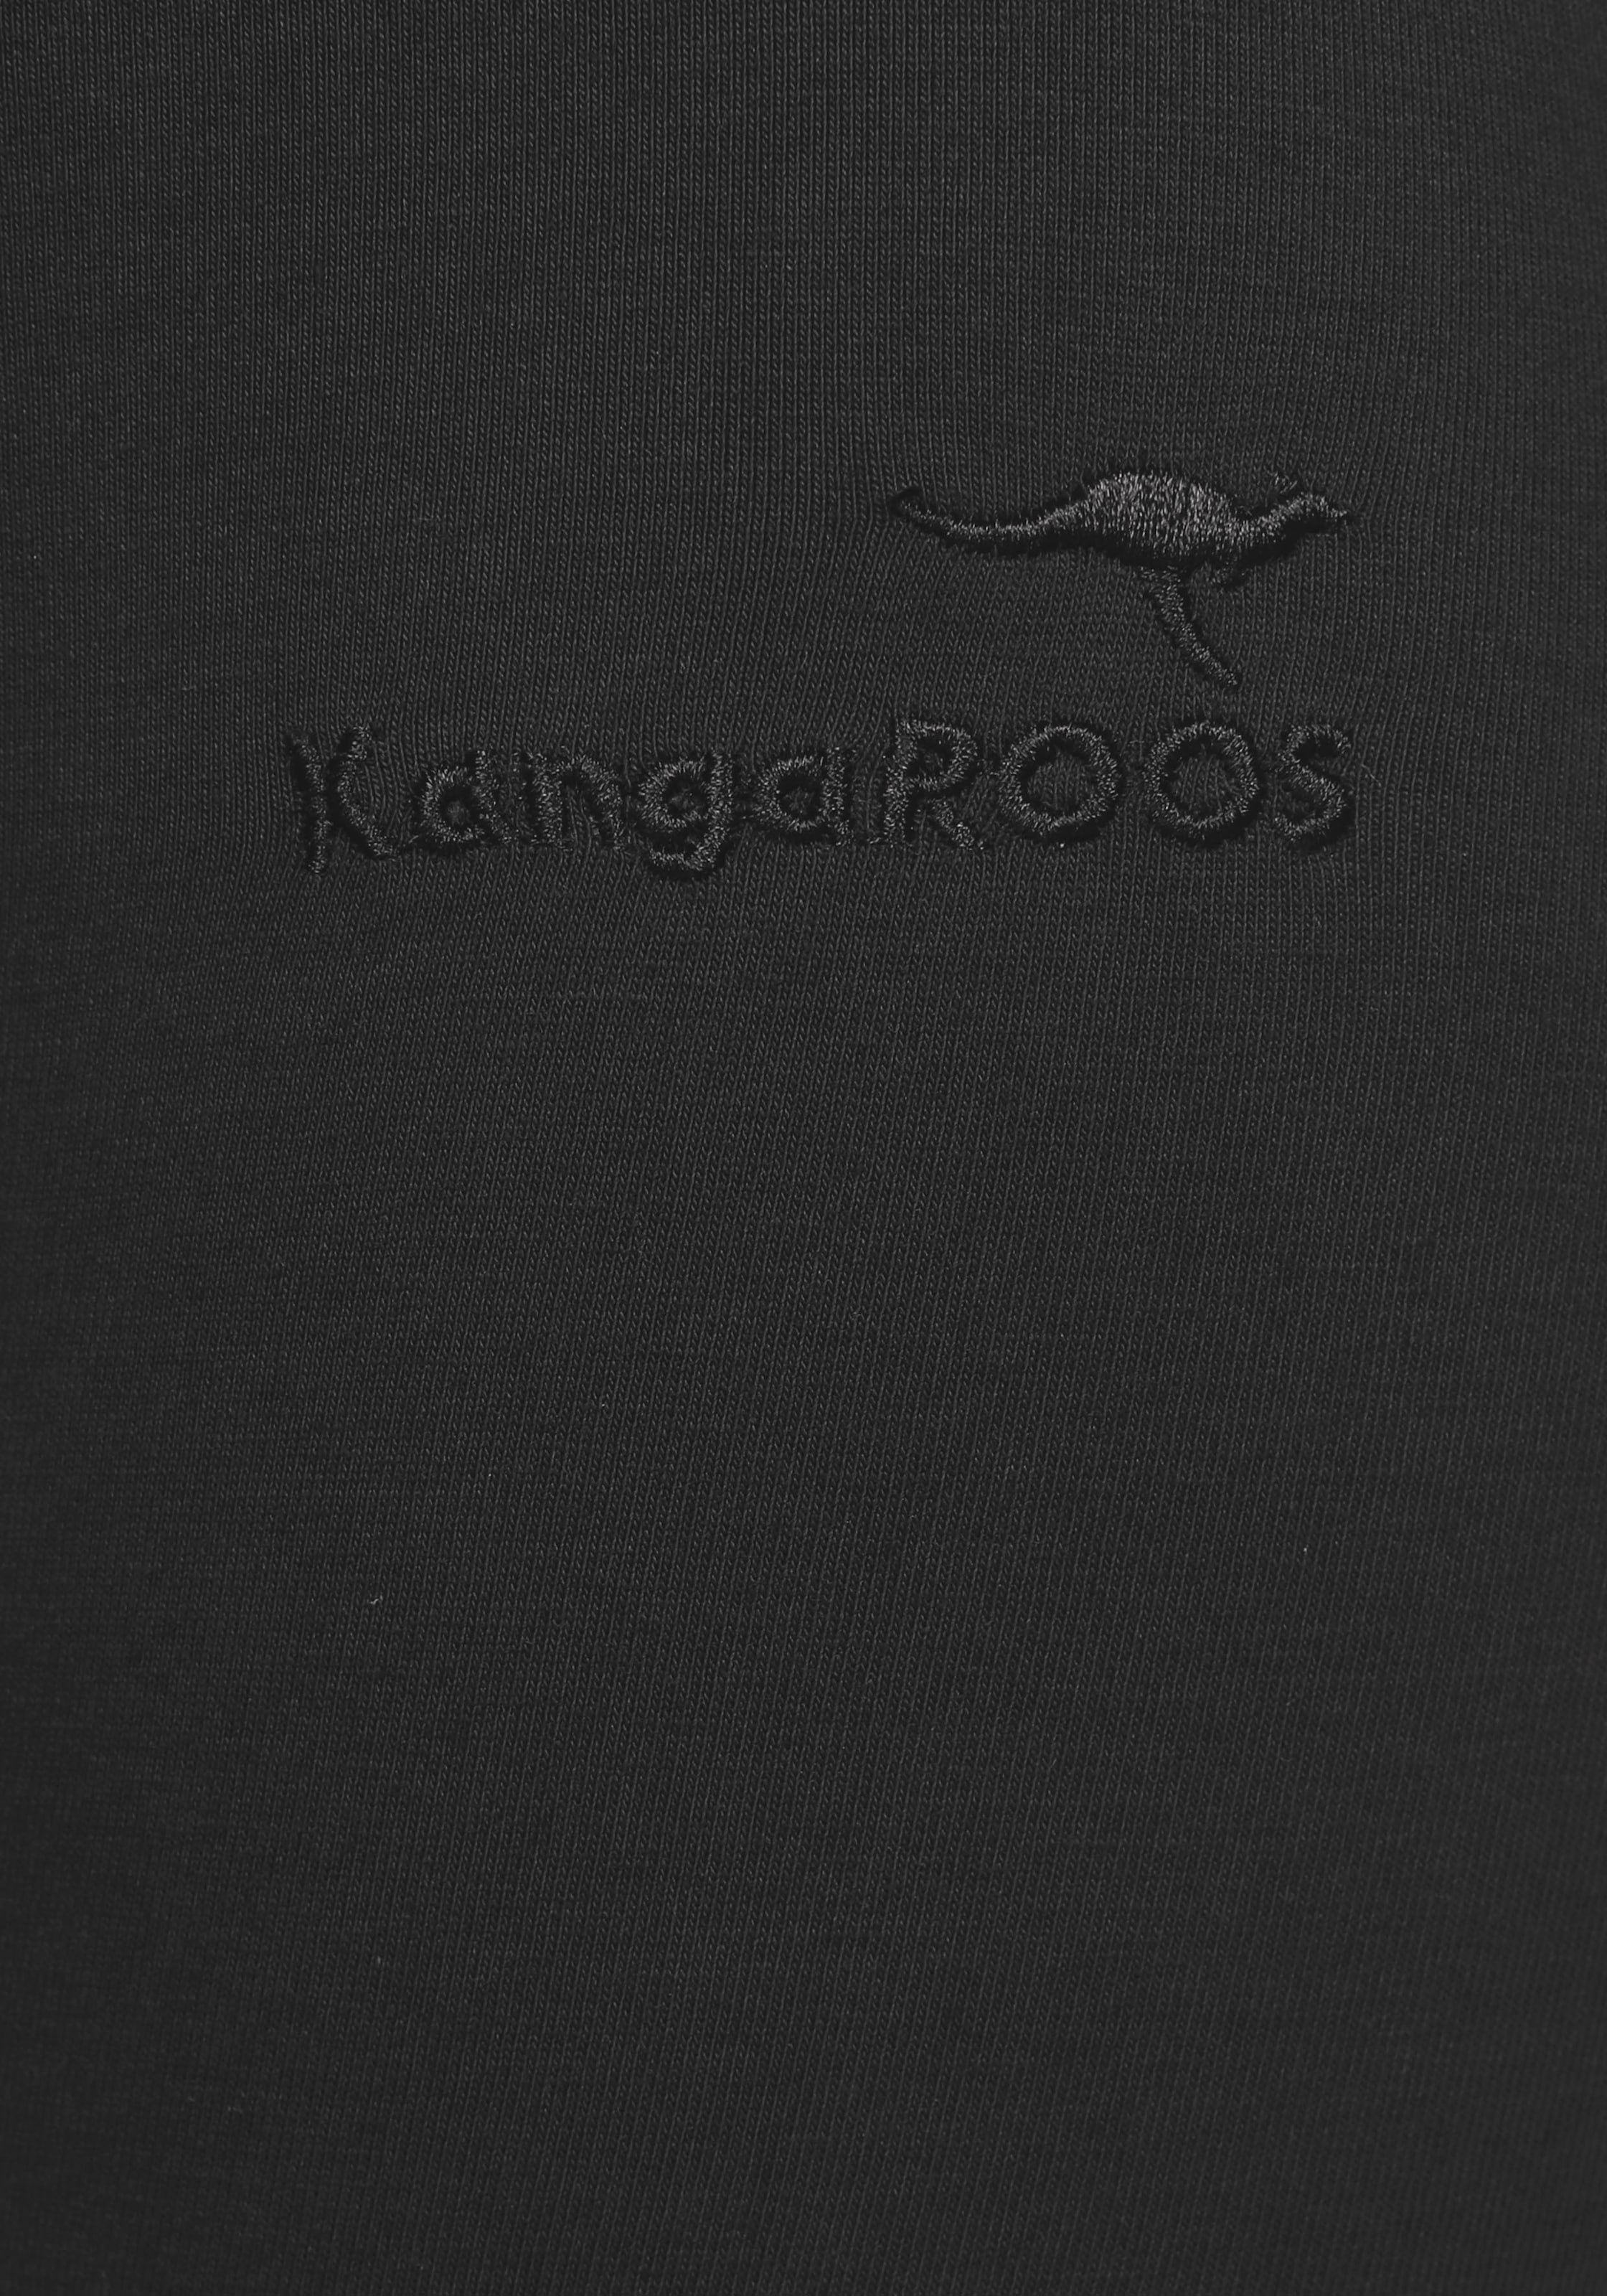 Aufschlag Leggings, bedruckten mit KangaROOS online